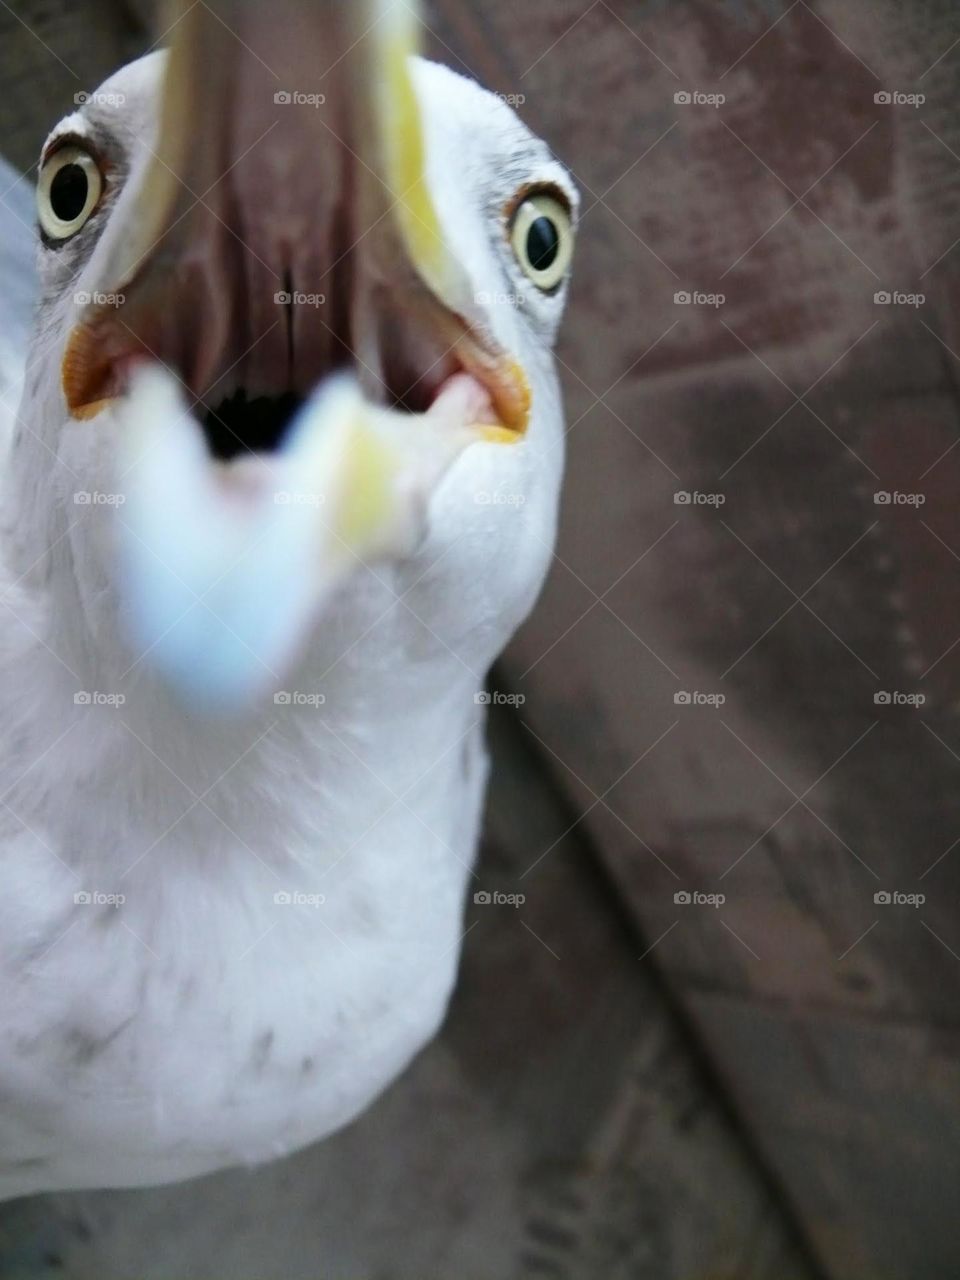 bird trying to bite camera. :D